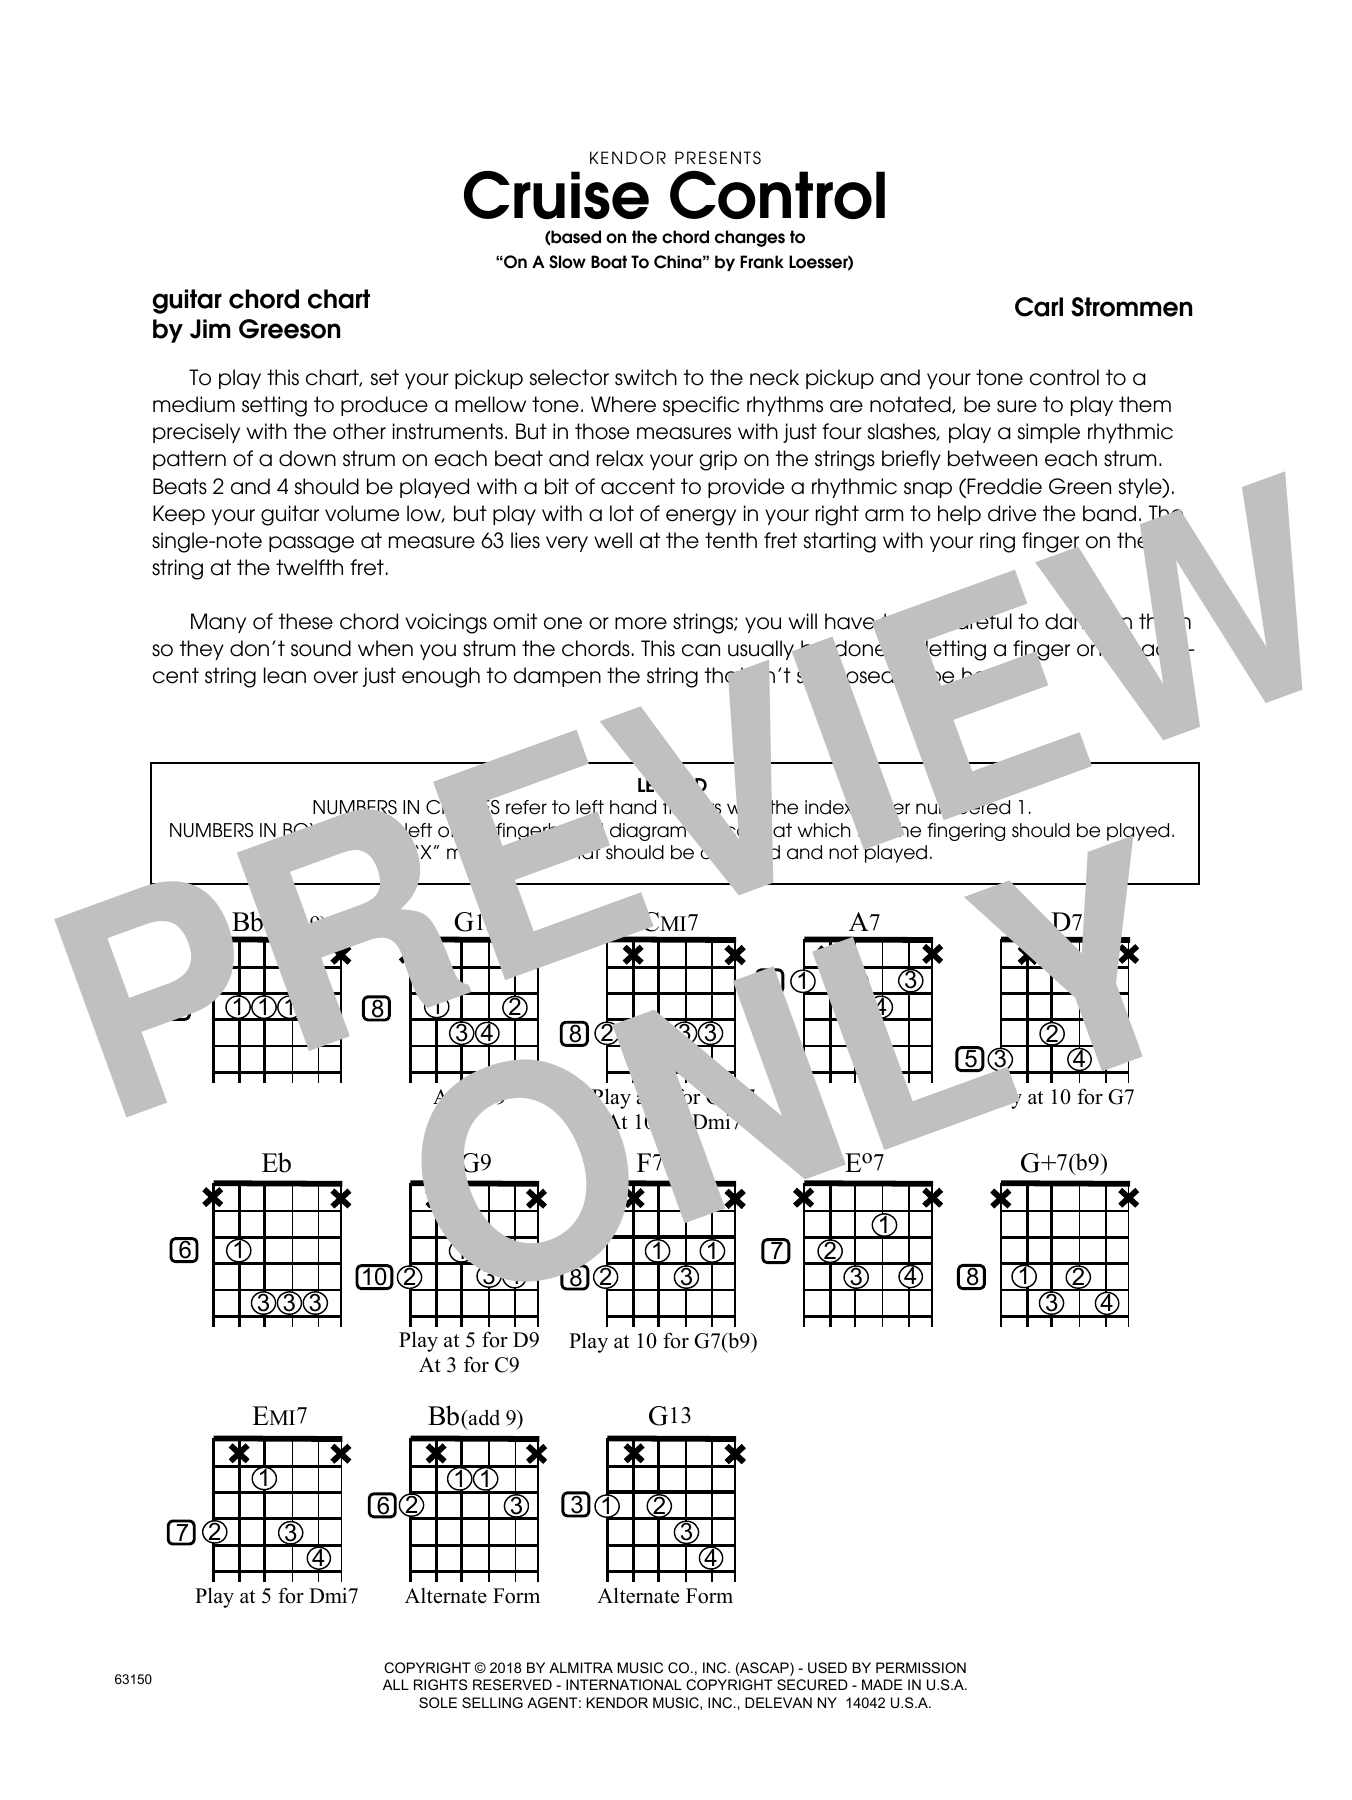 Download Carl Strommen Cruise Control - Guitar Chord Chart Sheet Music